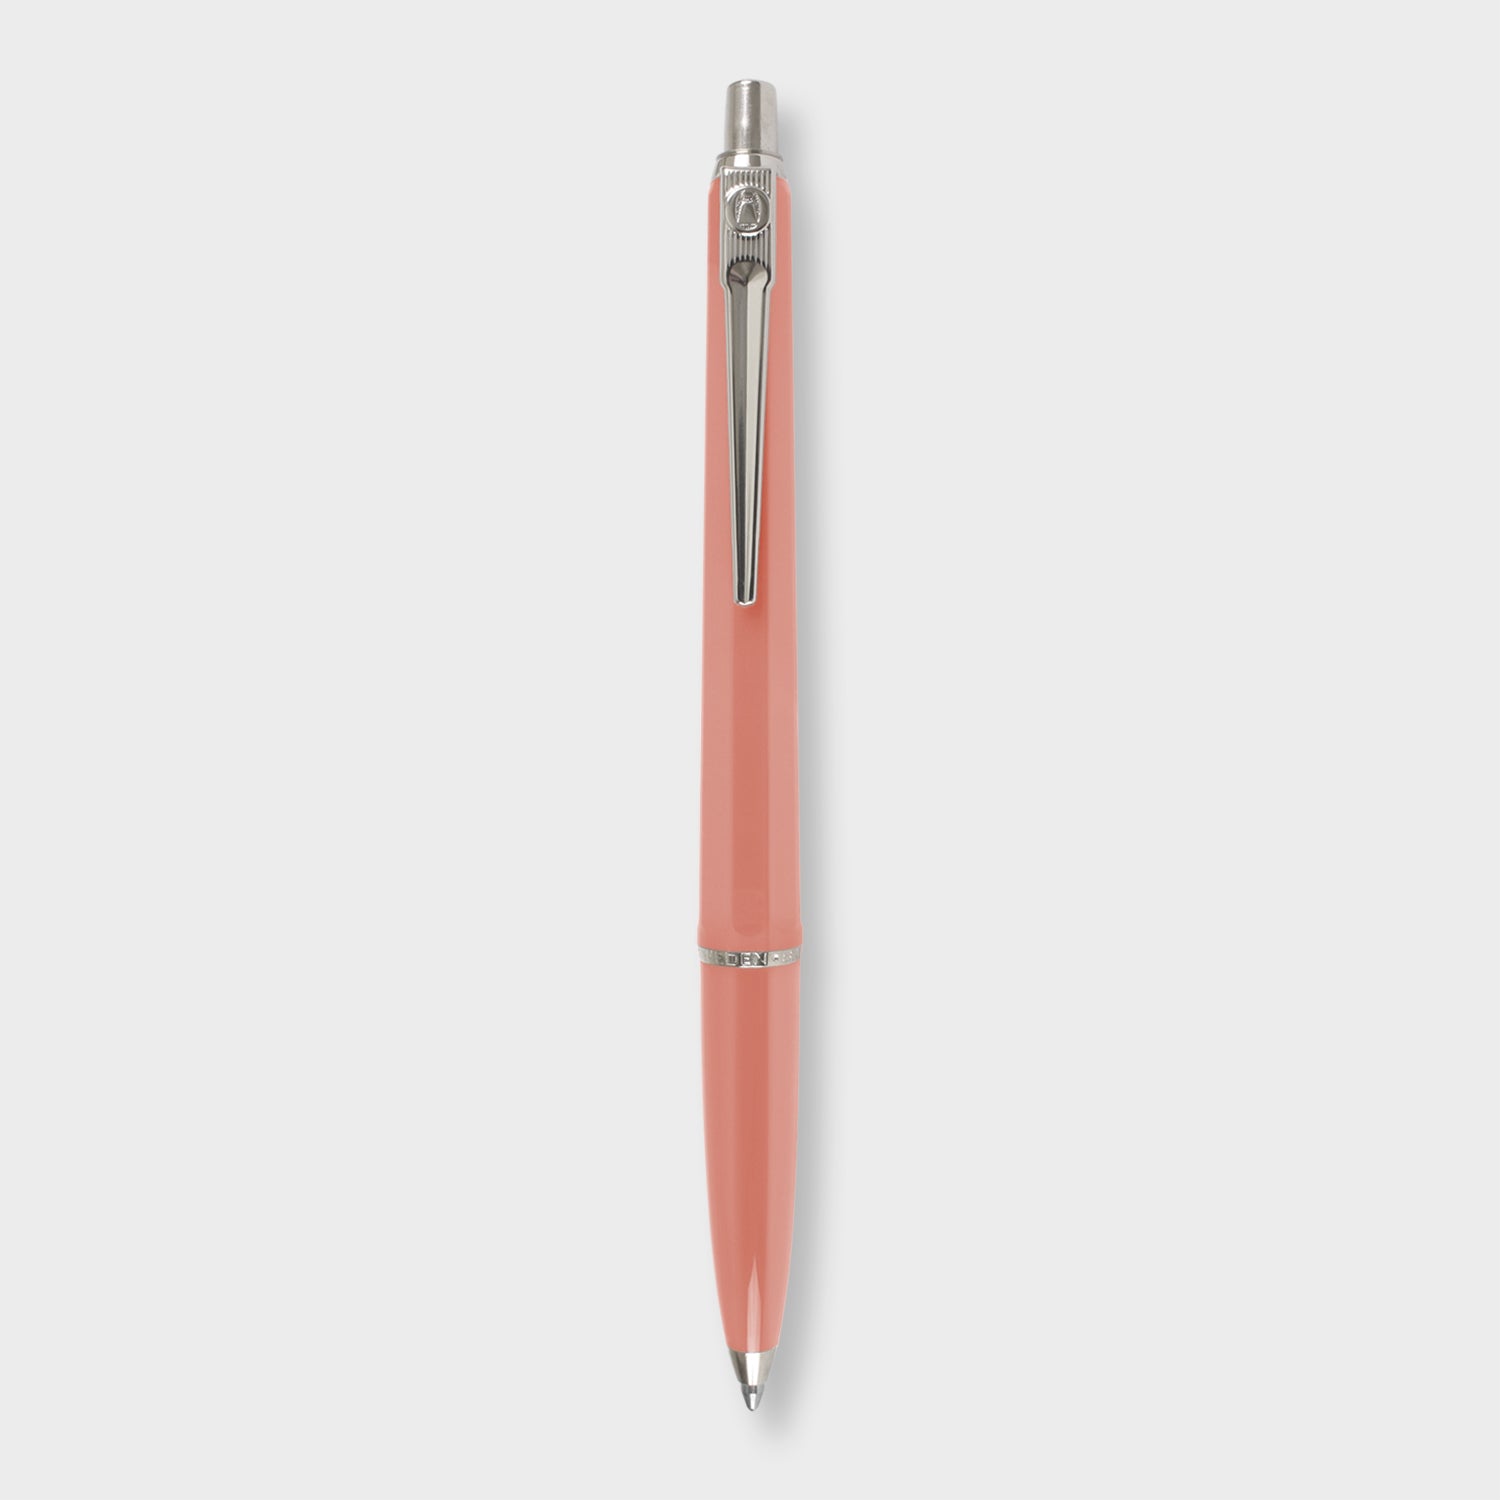 Epoca P Ballpoint Pen, salmon pink